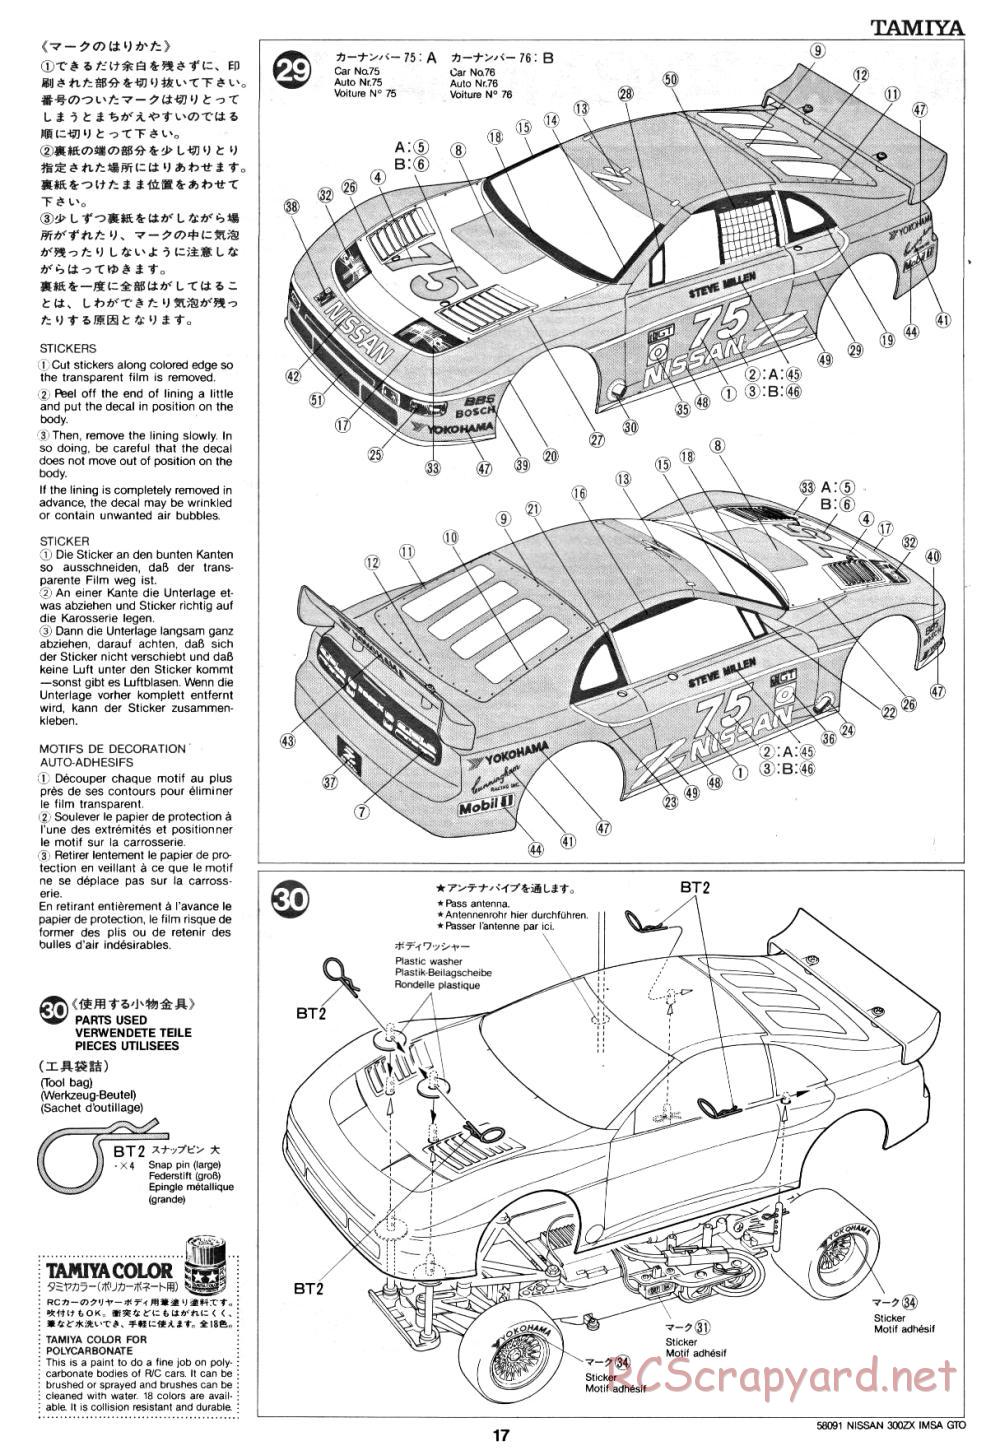 Tamiya - Nissan 300ZX IMSA GTO - 58091 - Manual - Page 17